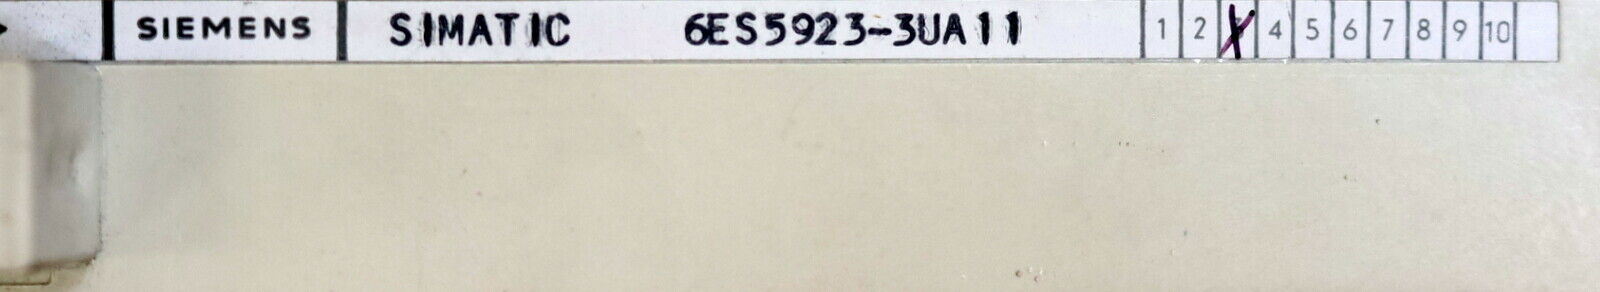 SIEMENS SIMATIC Koordinator-Karte für 135U 6ES5923-3UA11 - generalüberholt